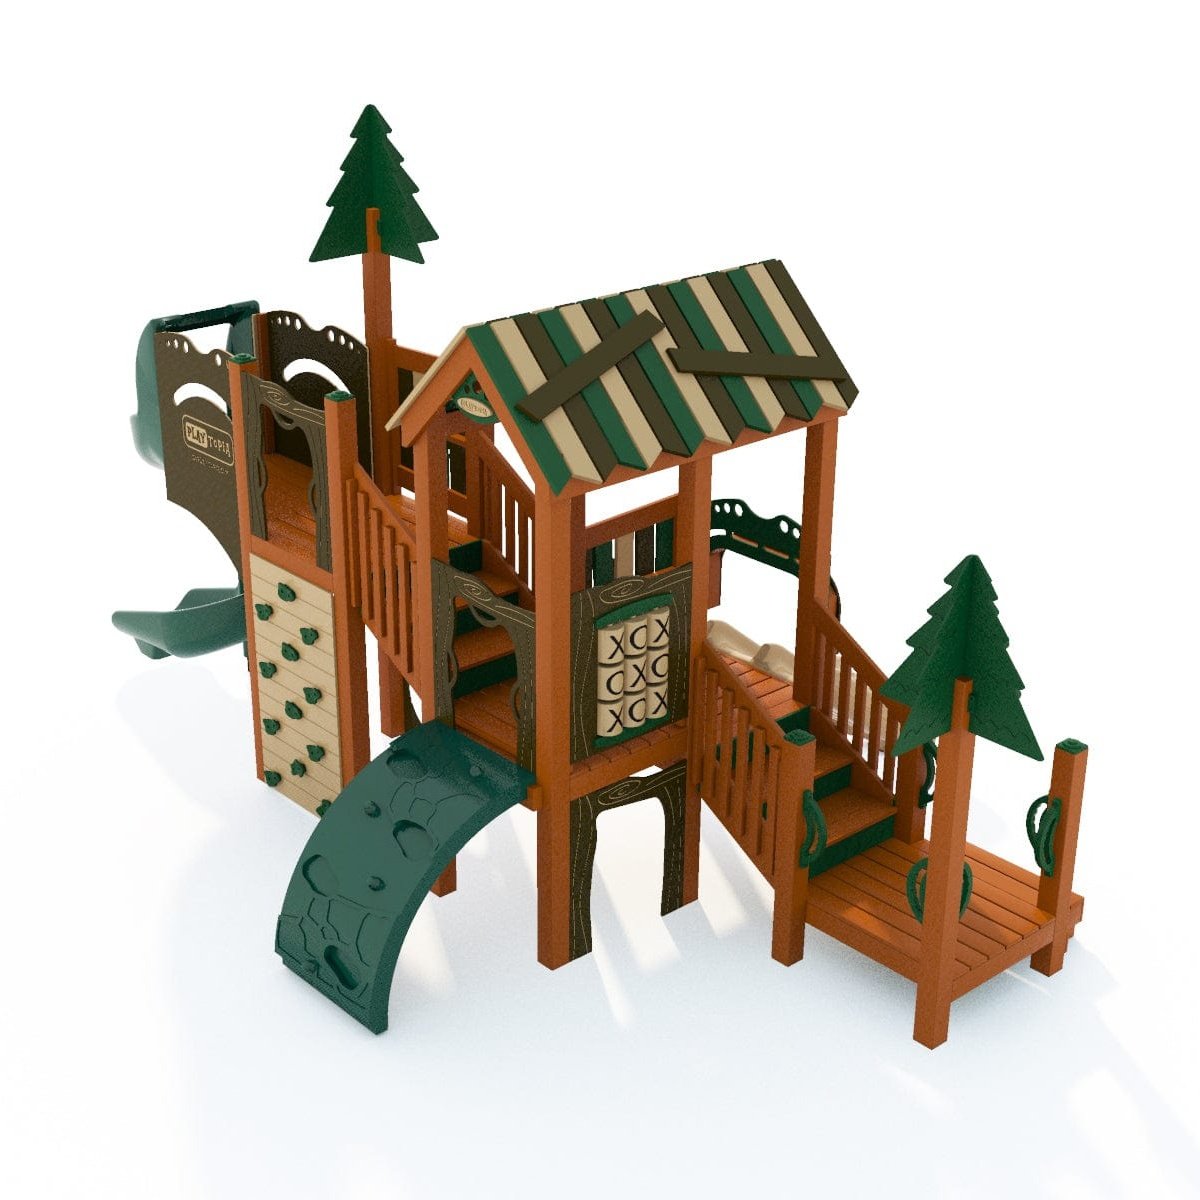 Giggle Grove Playset - School-Age Playgrounds - Playtopia, Inc.